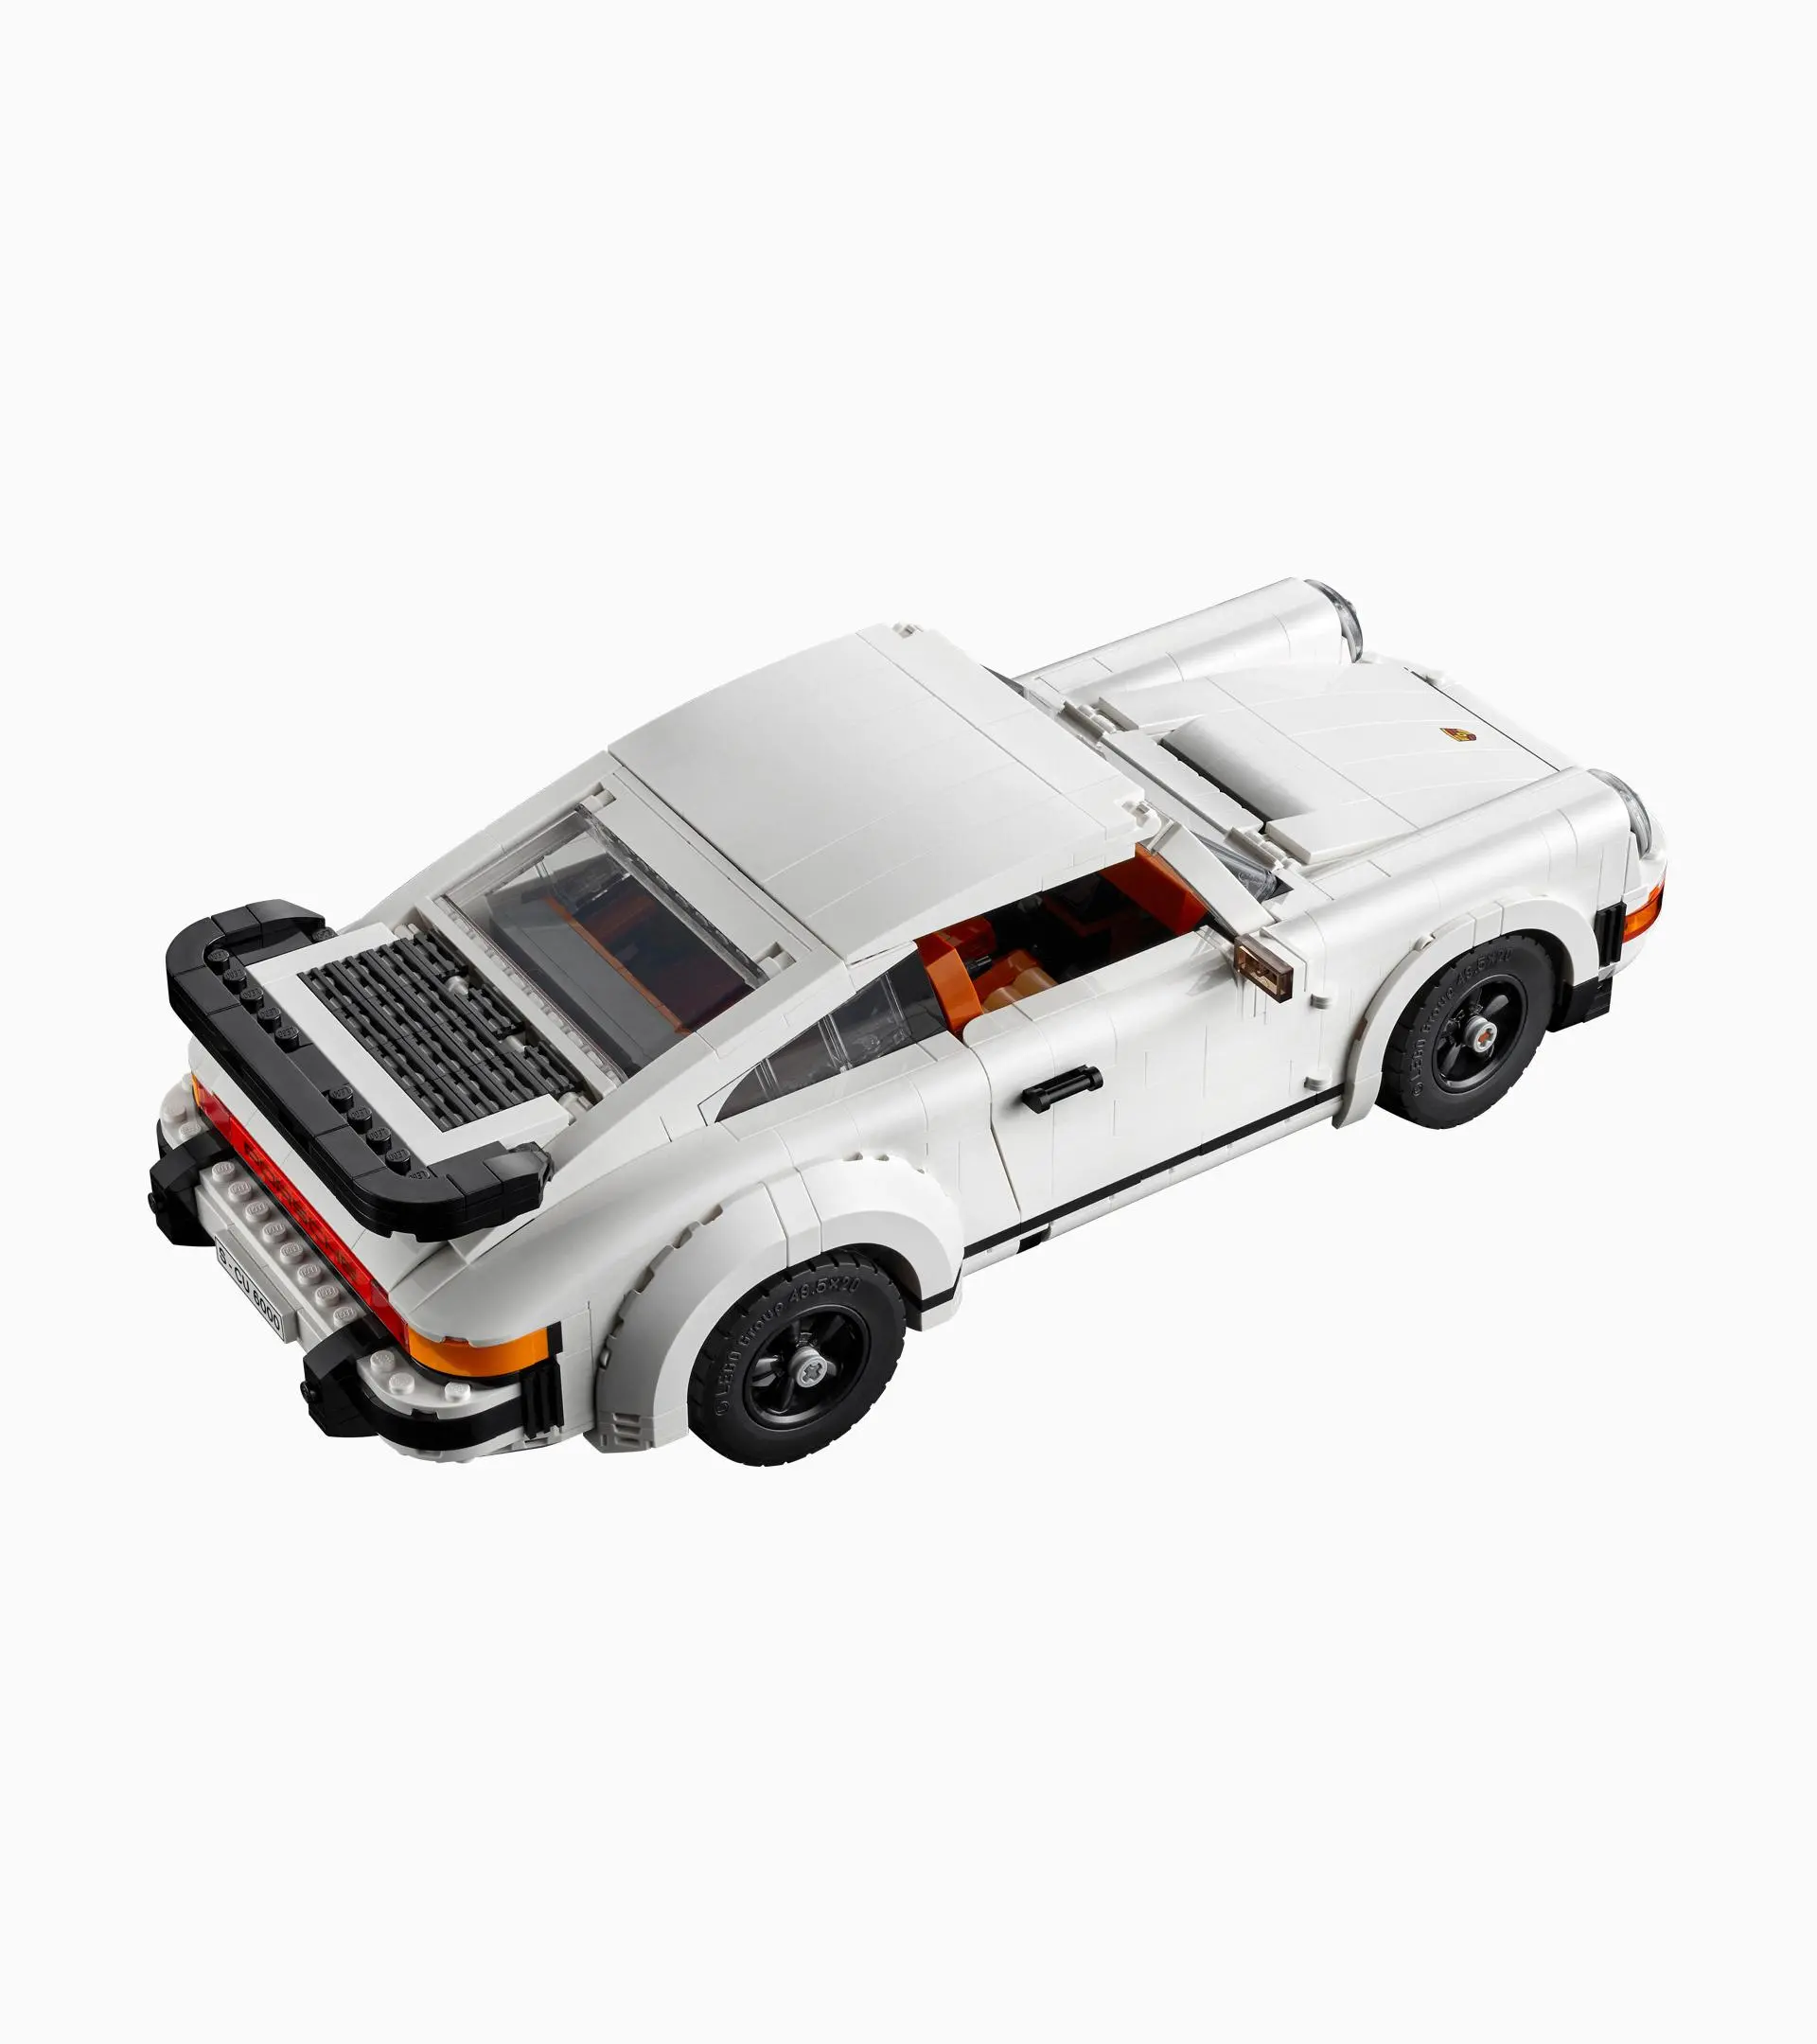 179 Pieces New 2019 LEGO Speed Champions 1974 Porsche 911 Turbo 3.0 75895 Building Kit 